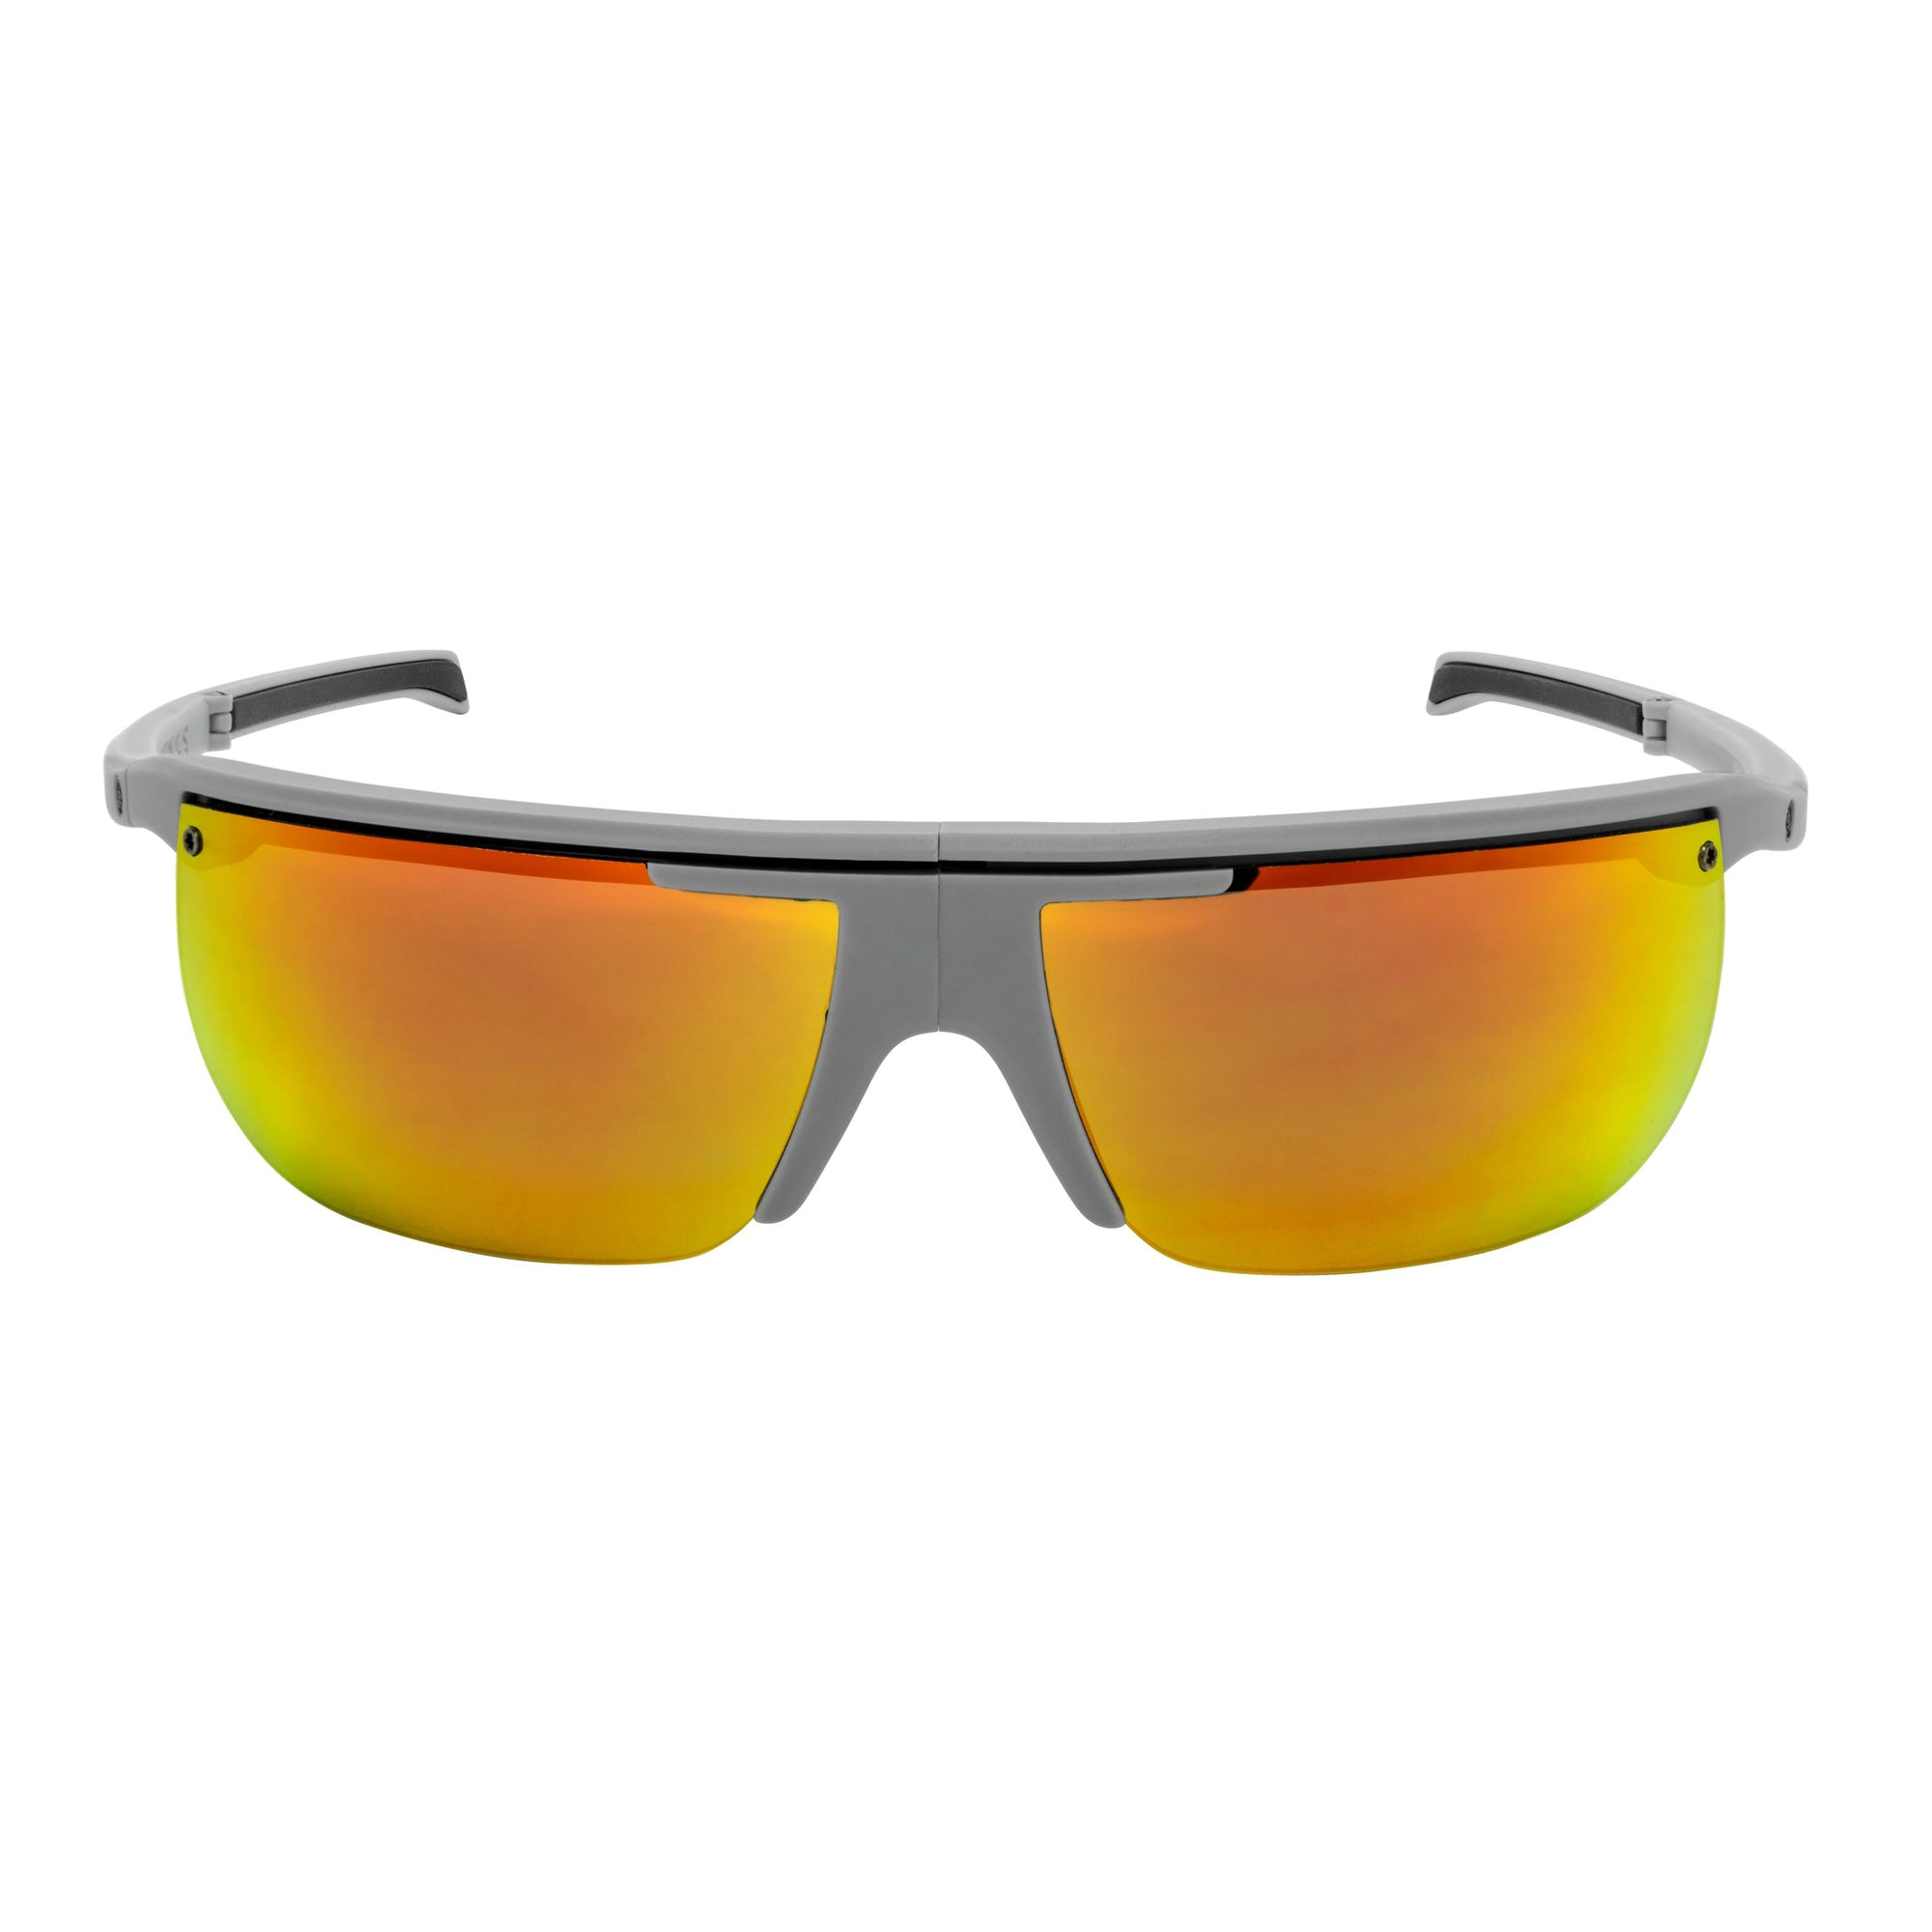 Popticals, Premium Compact Sunglasses, PopArt, 010030-GMON, Polarized Sunglasses, Matte Gray Frame, Gray Lenses with Orange Mirror Finish, Glam View